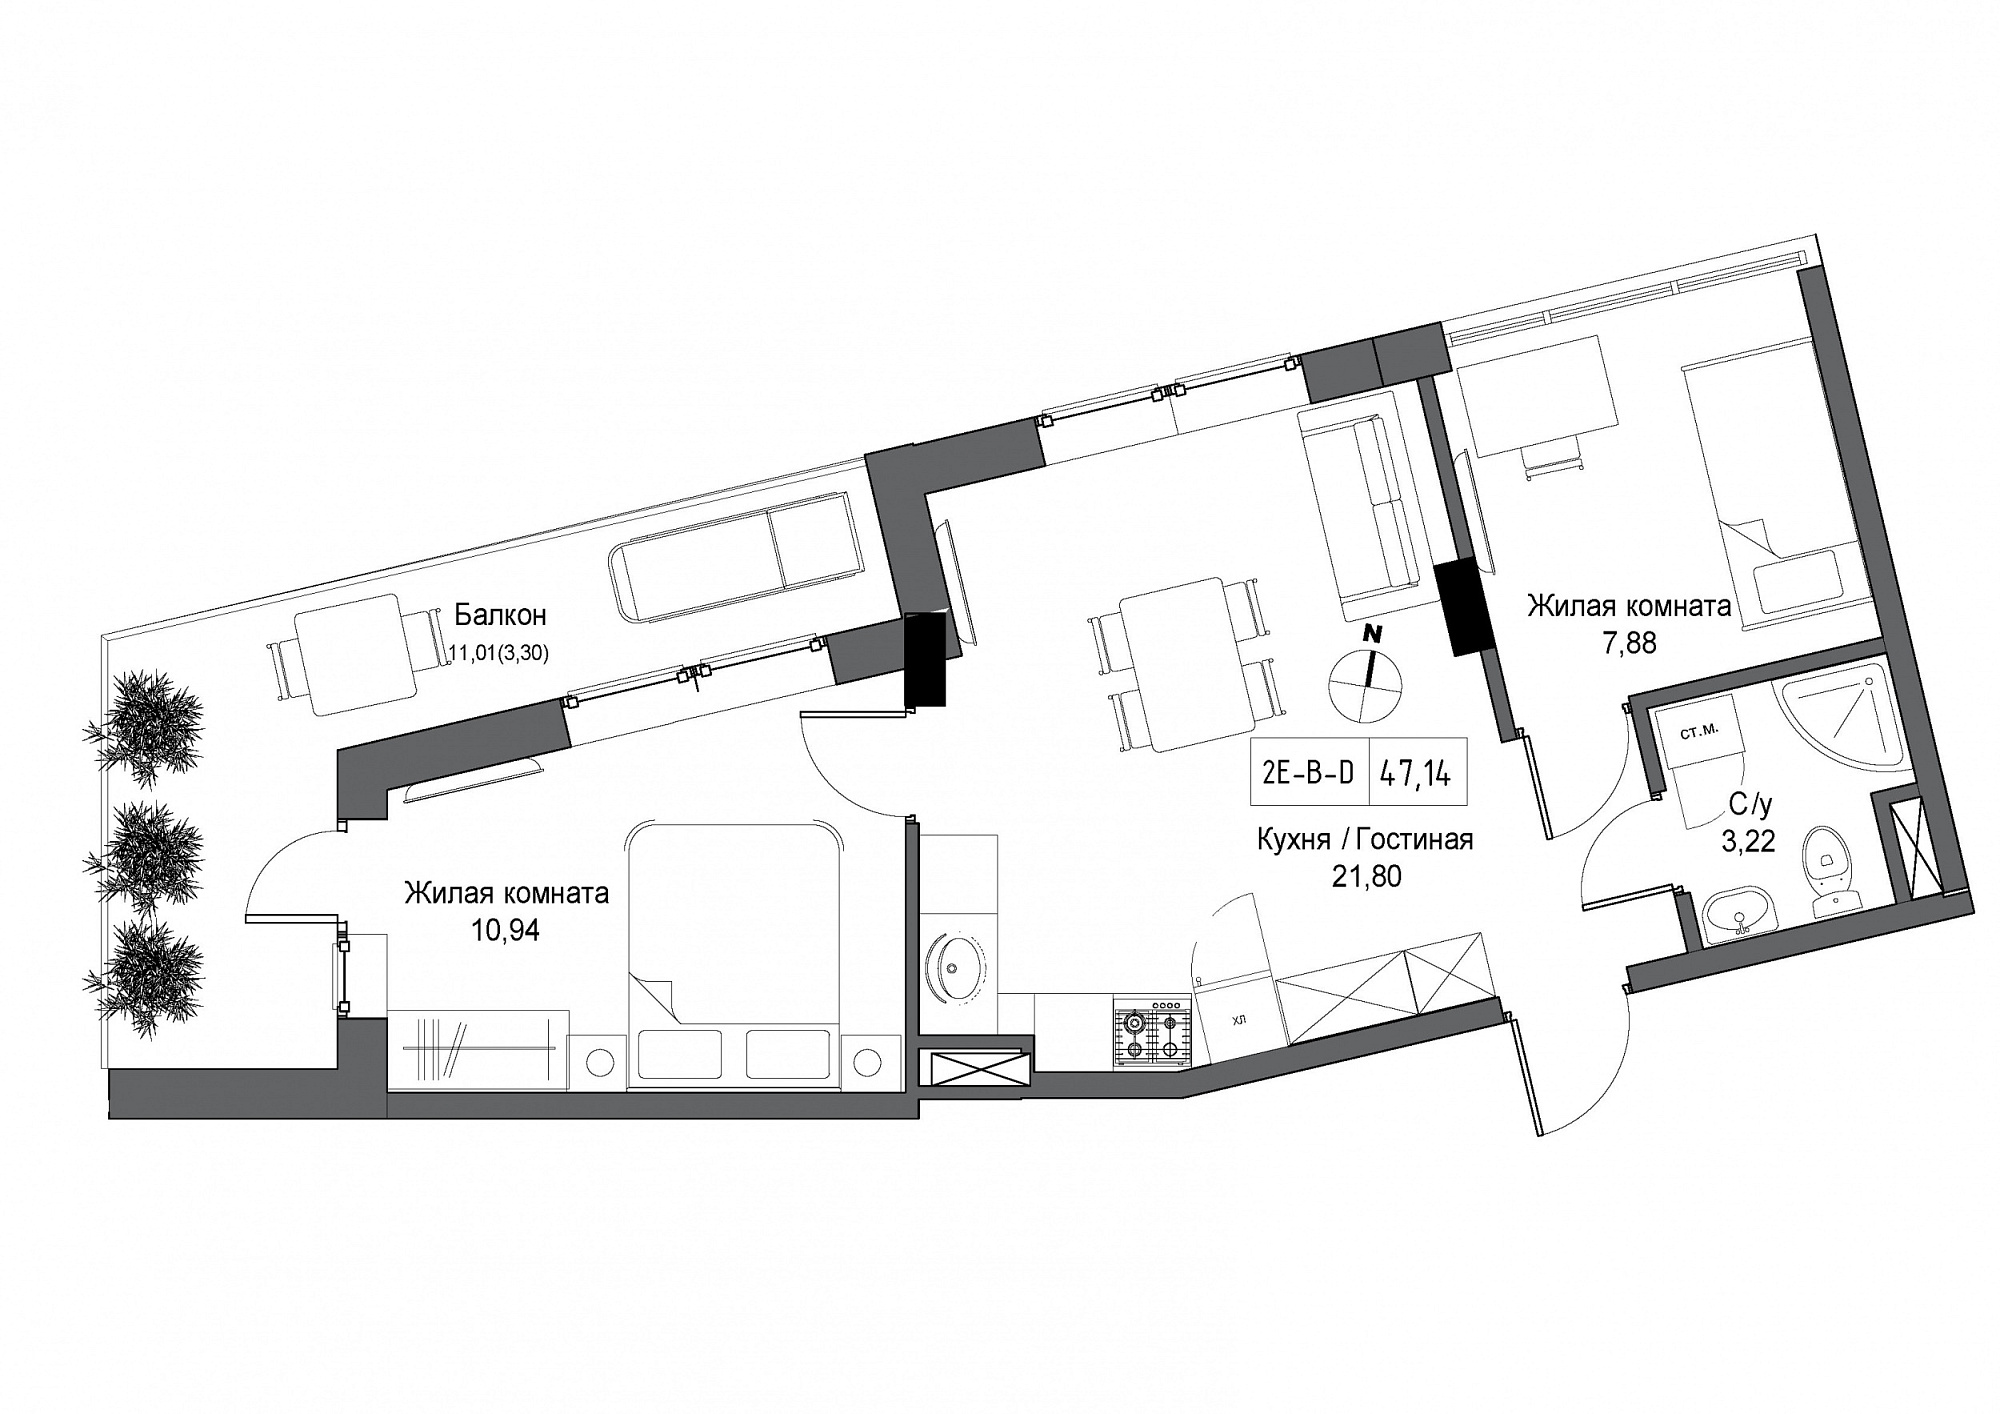 Планування 2-к квартира площею 47.14м2, UM-004-09/0015.